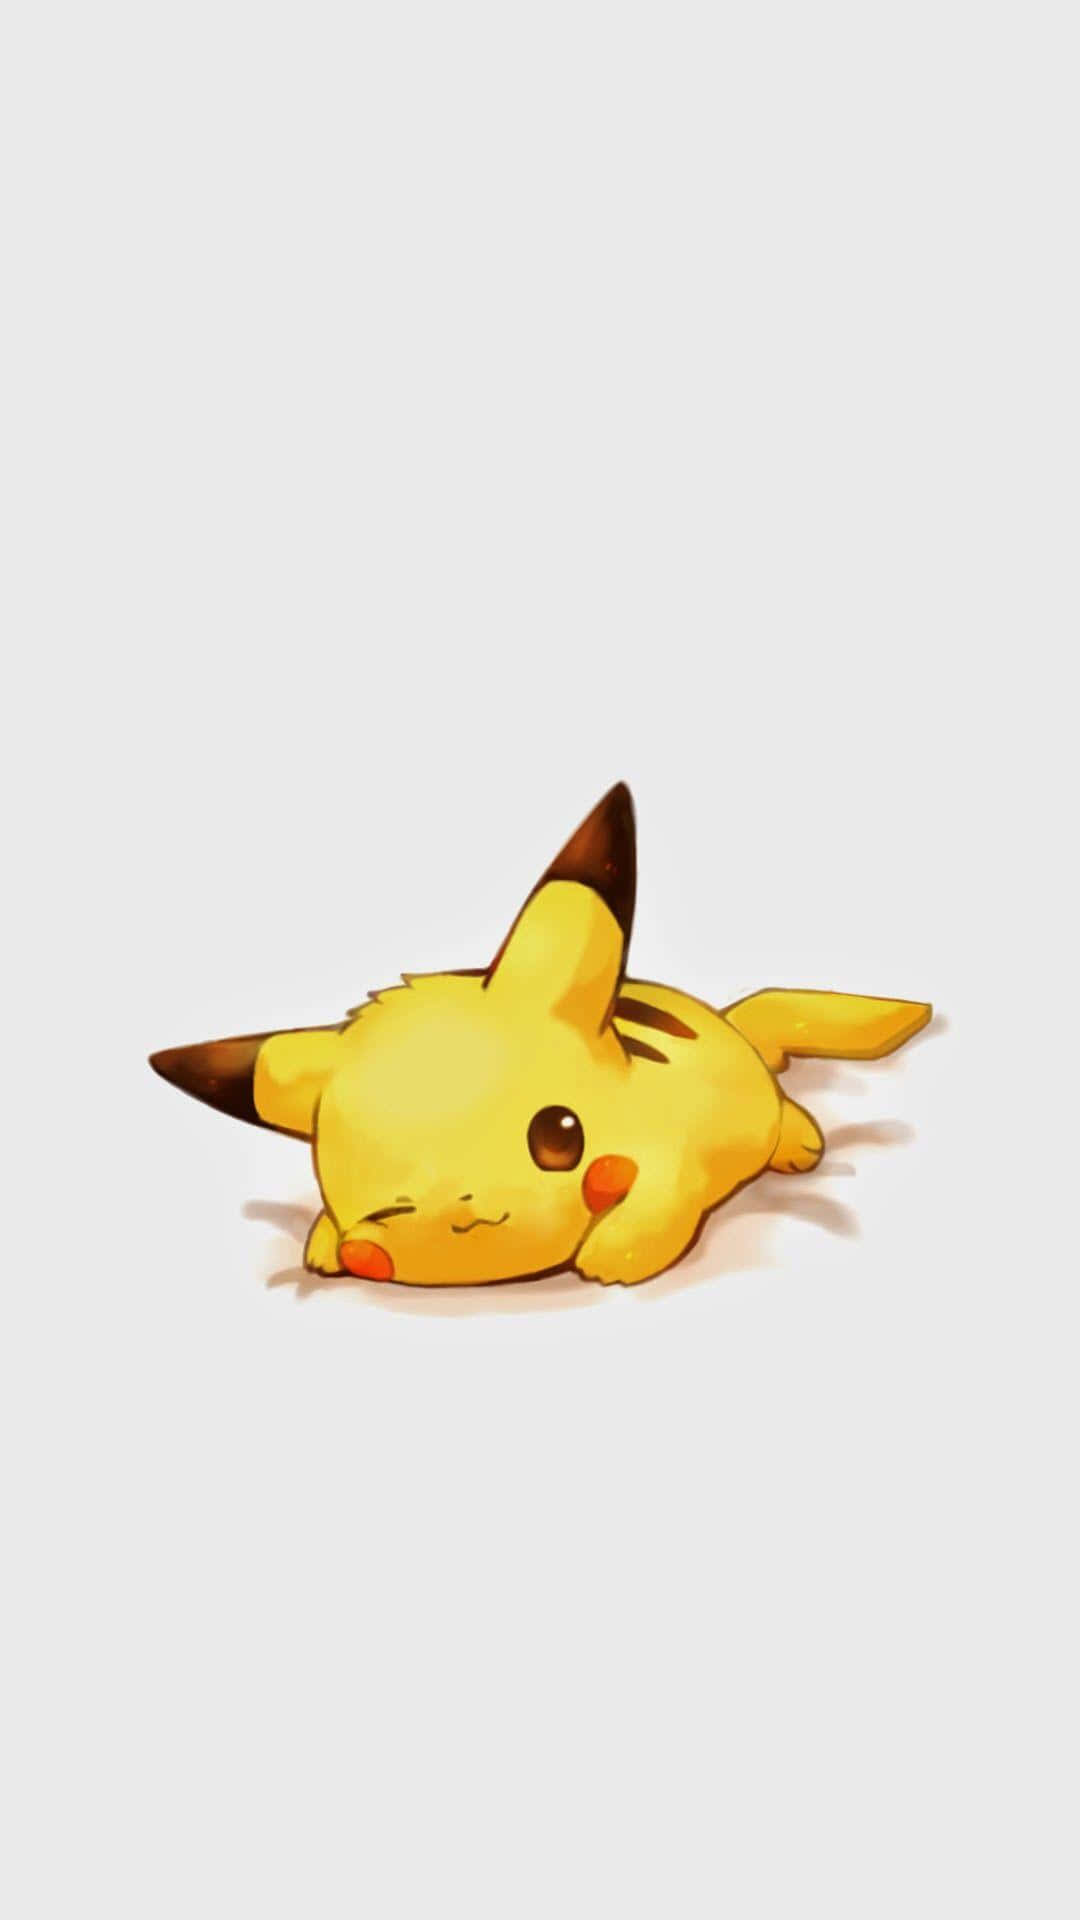 Adorable Baby Pikachu Wallpaper